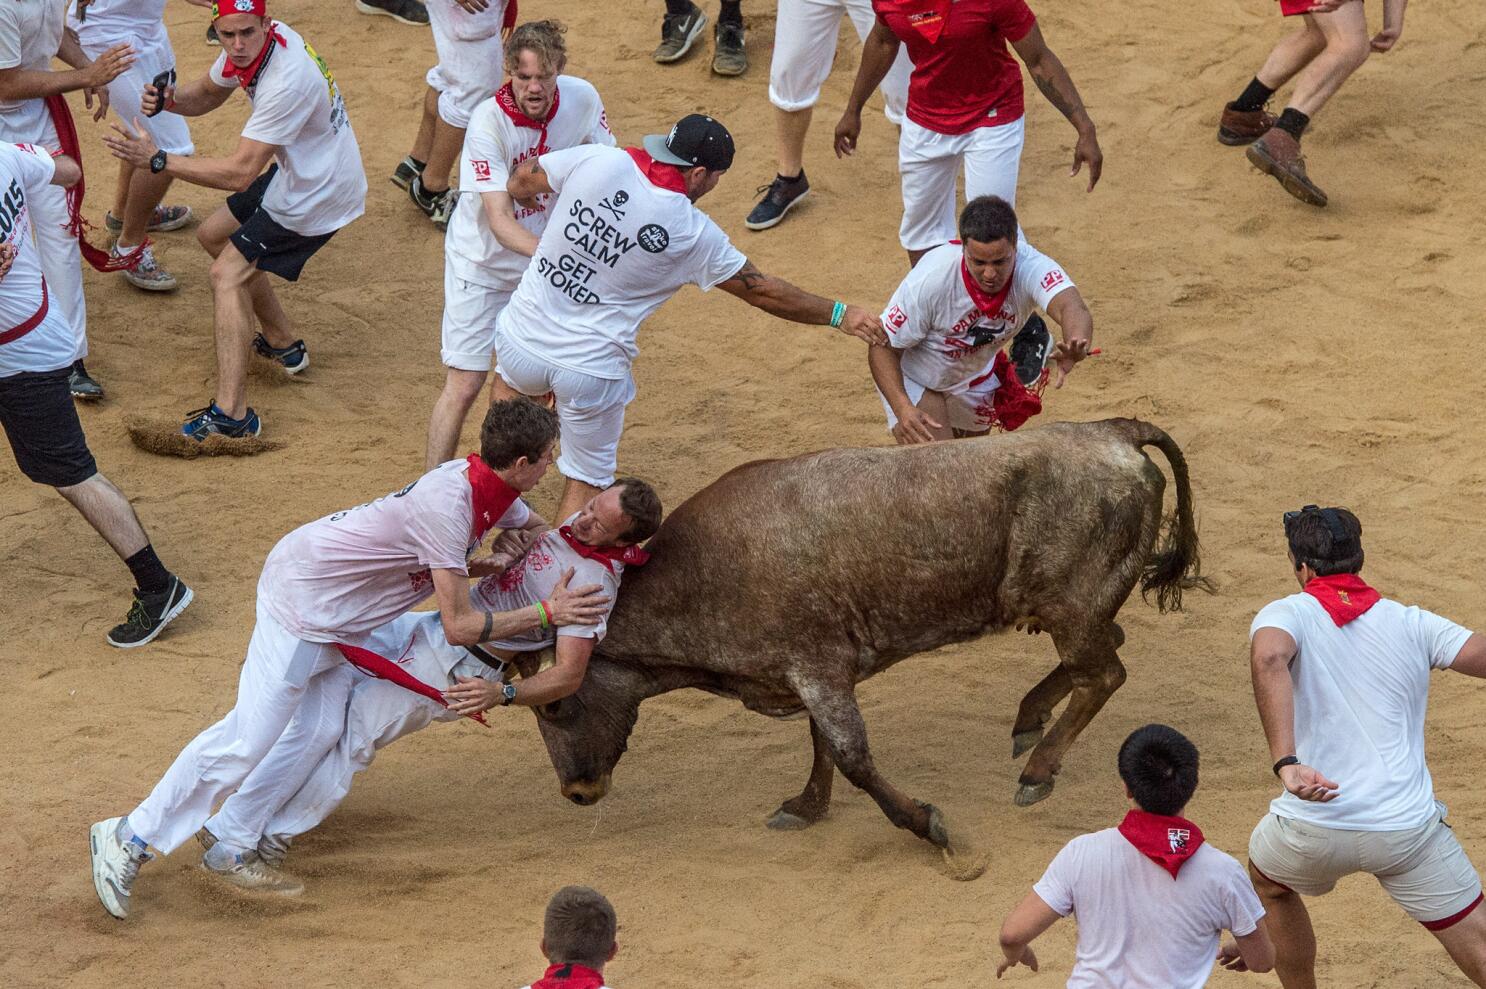 San Fermin Attire for the Running of the Bulls